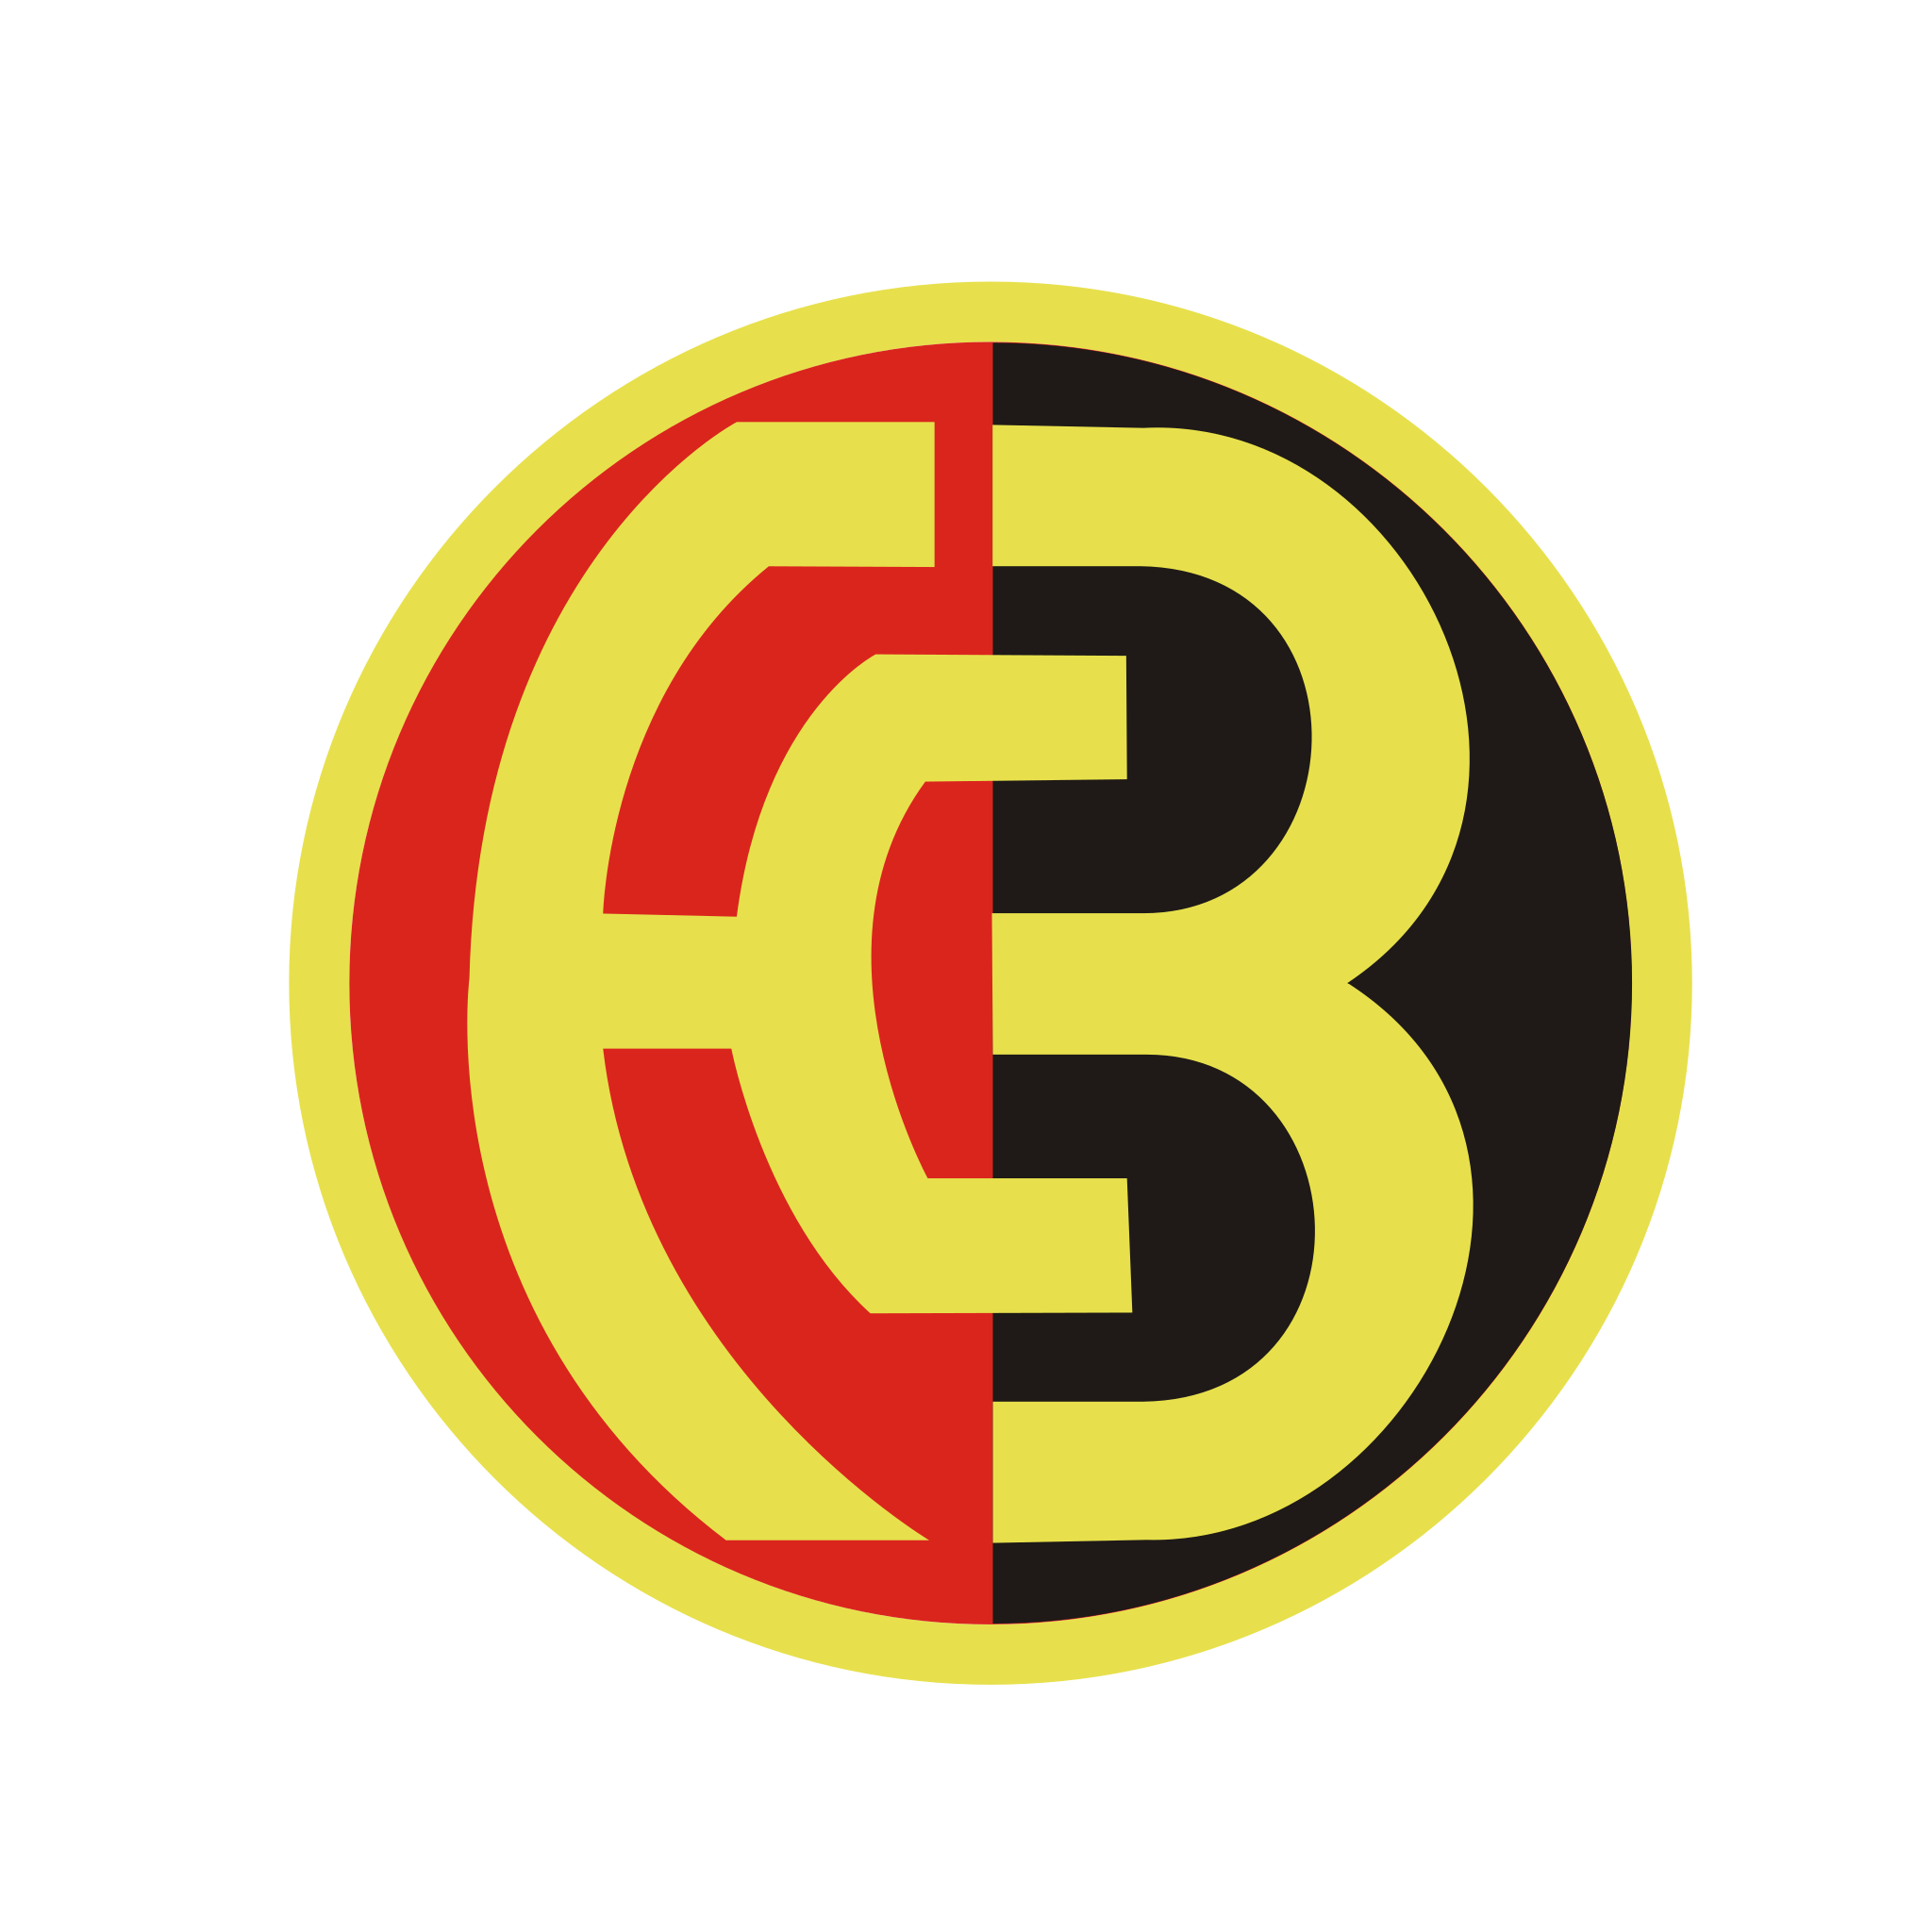 Клуб Берн эмблема. Эмблема футбольного клуба Базель. Szene Bern логотип. Эмблема футбольного клуба Модерн.